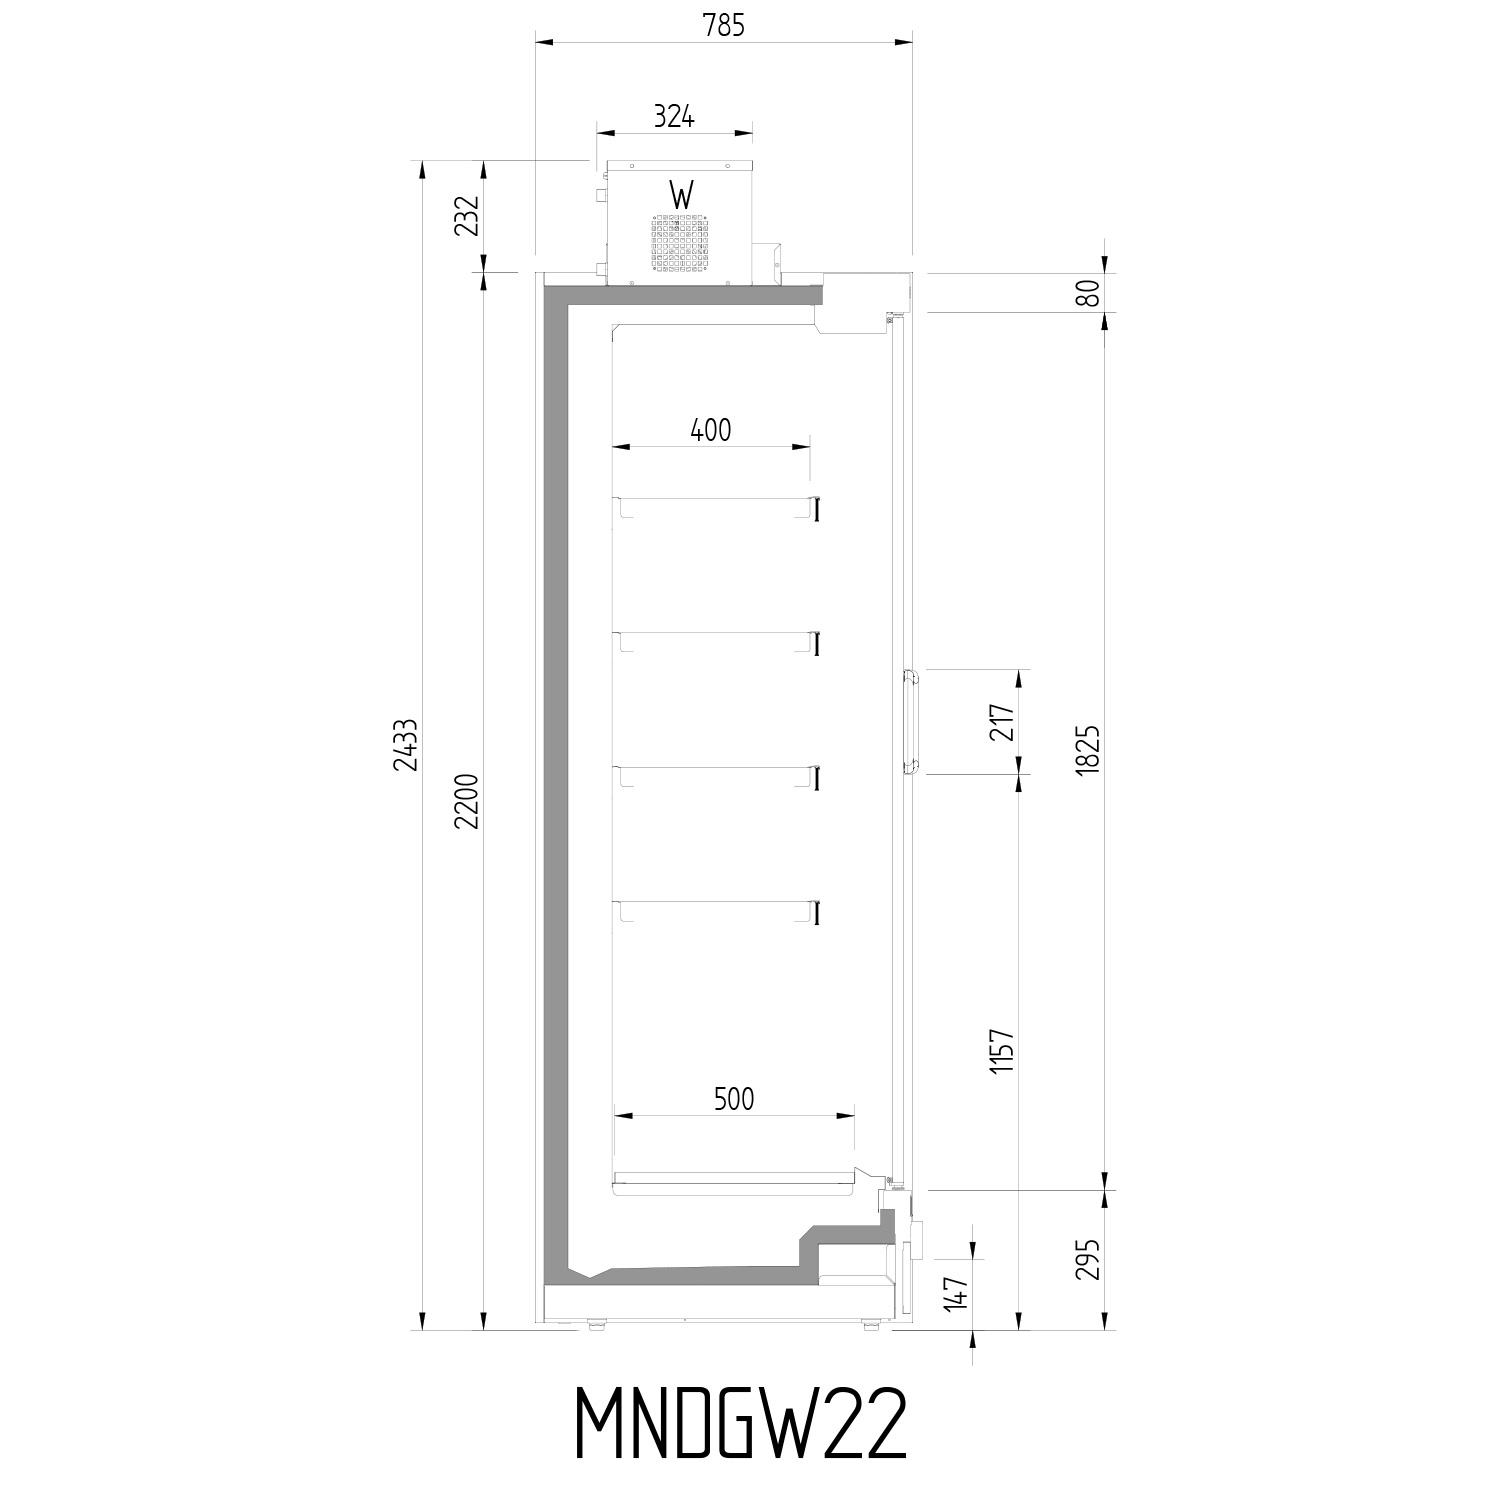 MNDGW22